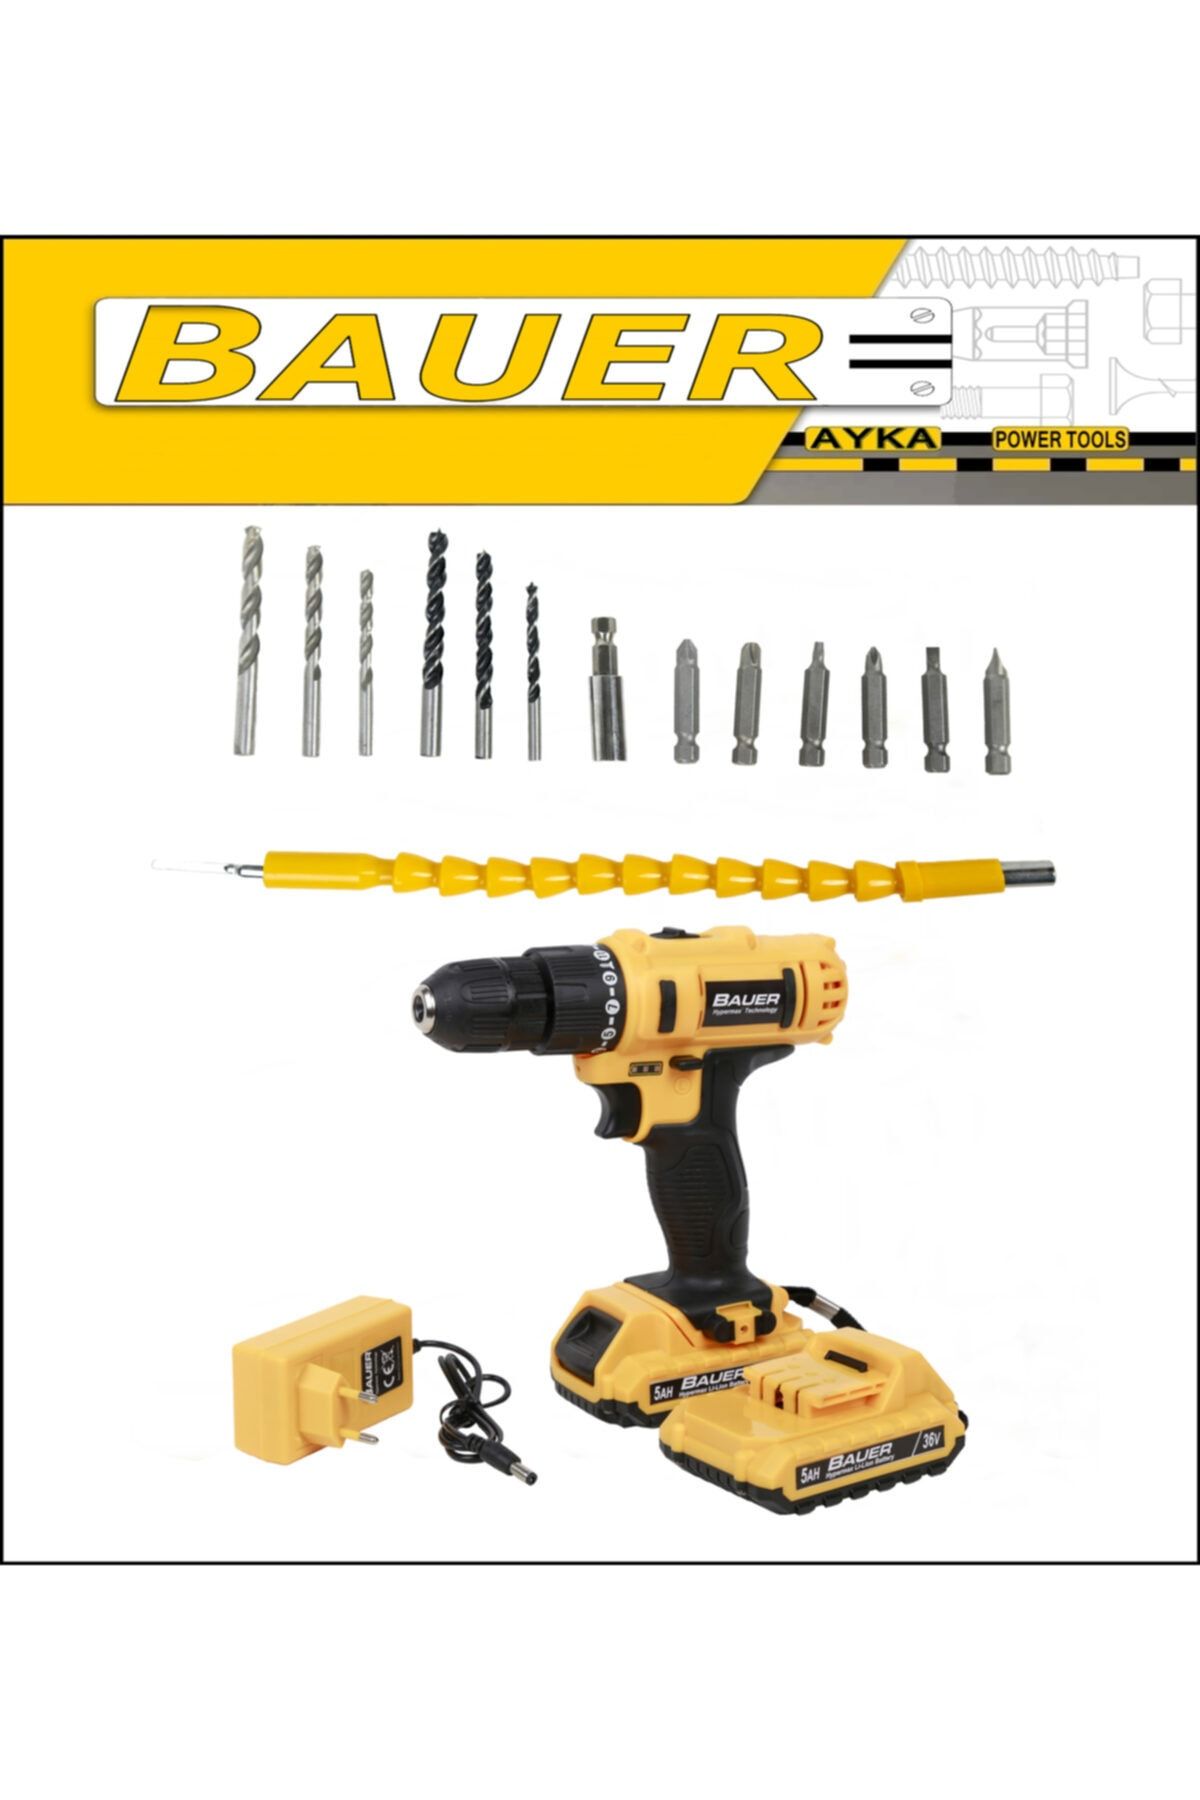 BAUER Power Tools 36 Volt 5,0 Amper Darbeli Metal Şanzuman +27 Parça Set Şarjlı Vidalama Matkap